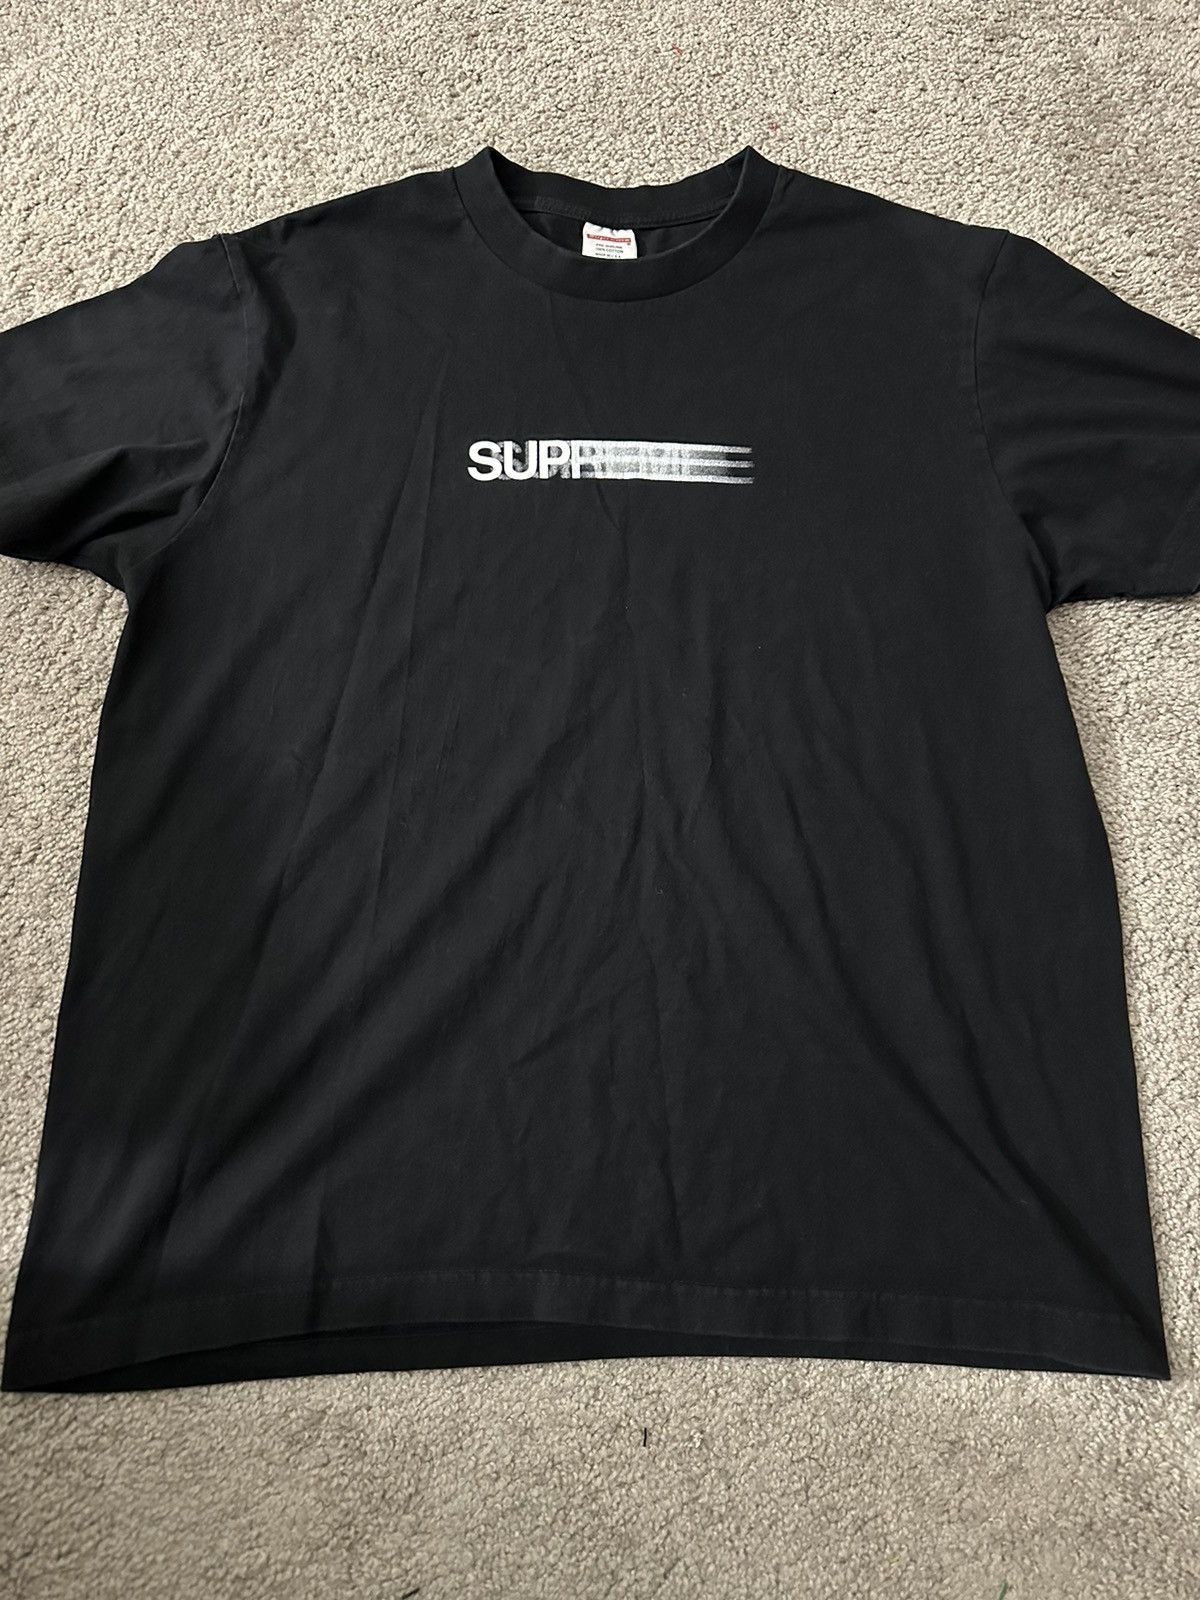 Supreme Supreme Motion Logo Shirt | Grailed